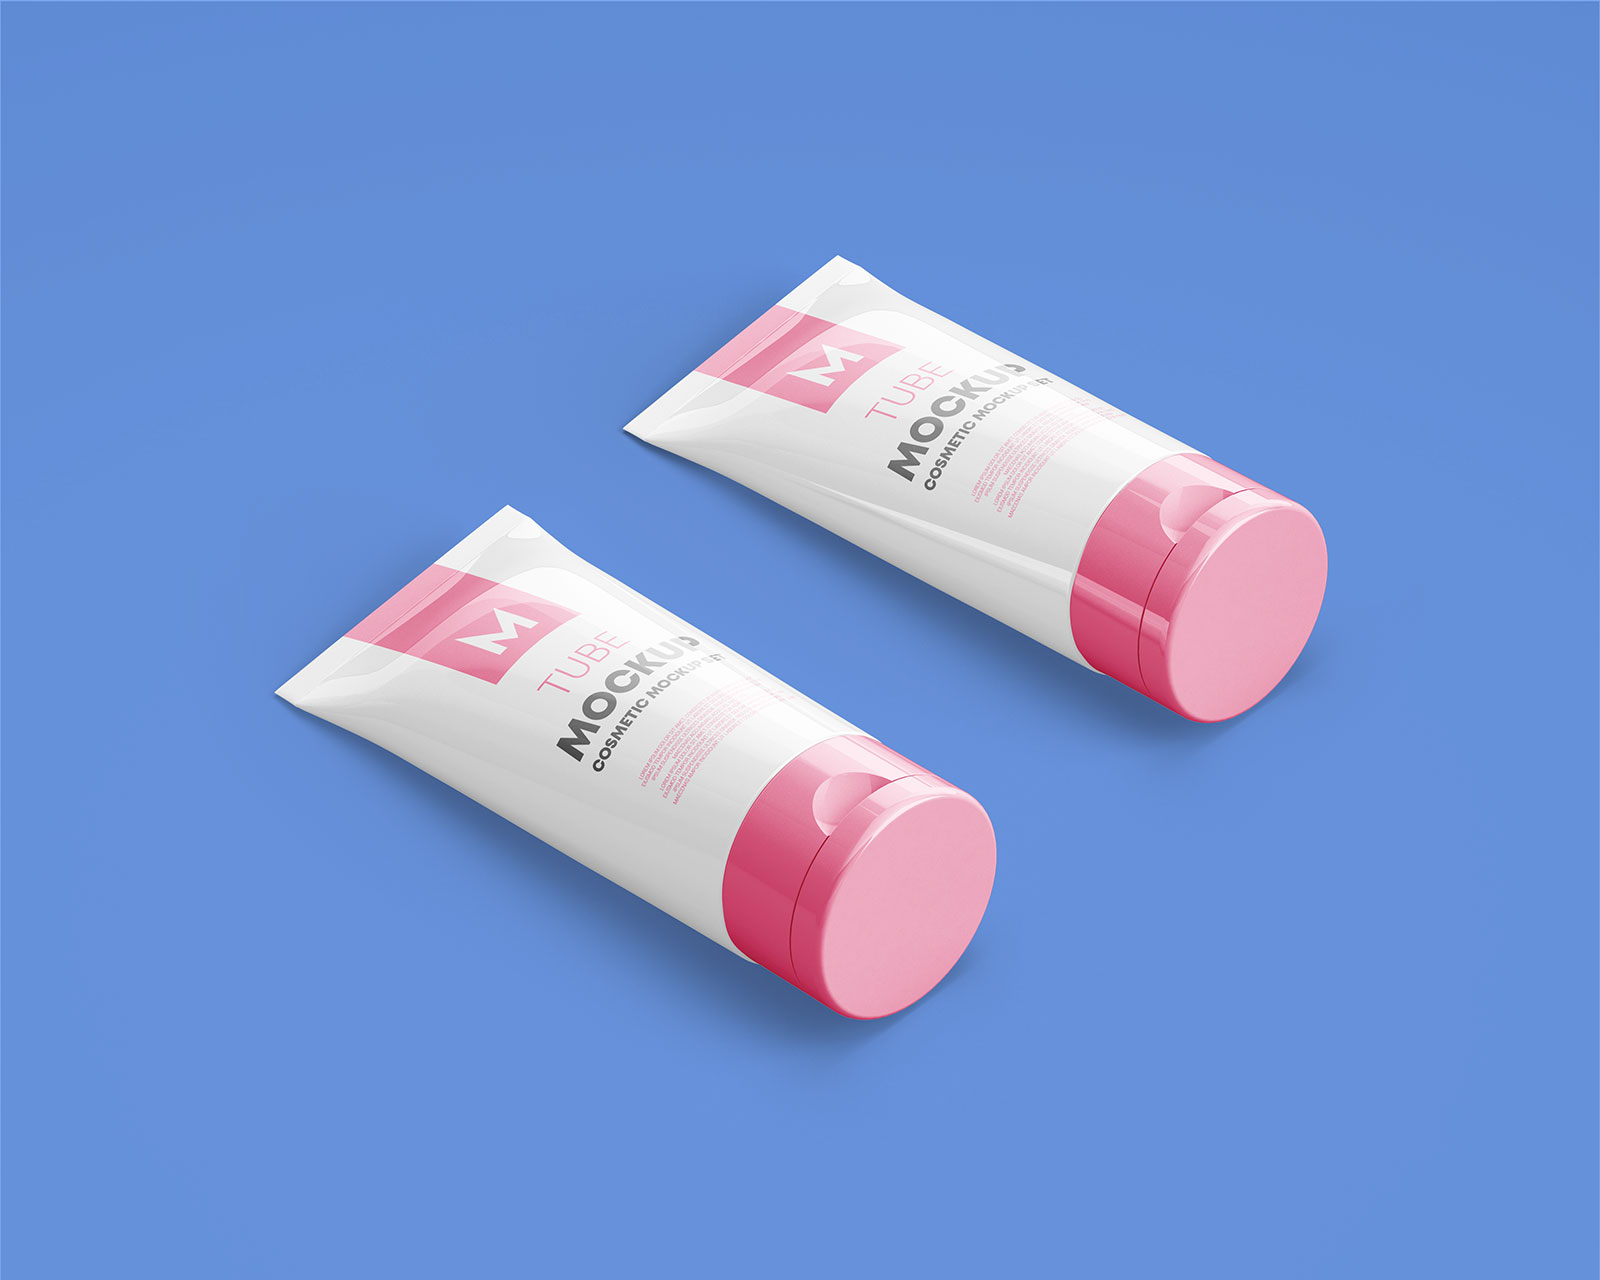 Free cosmetic cream tubes mockup